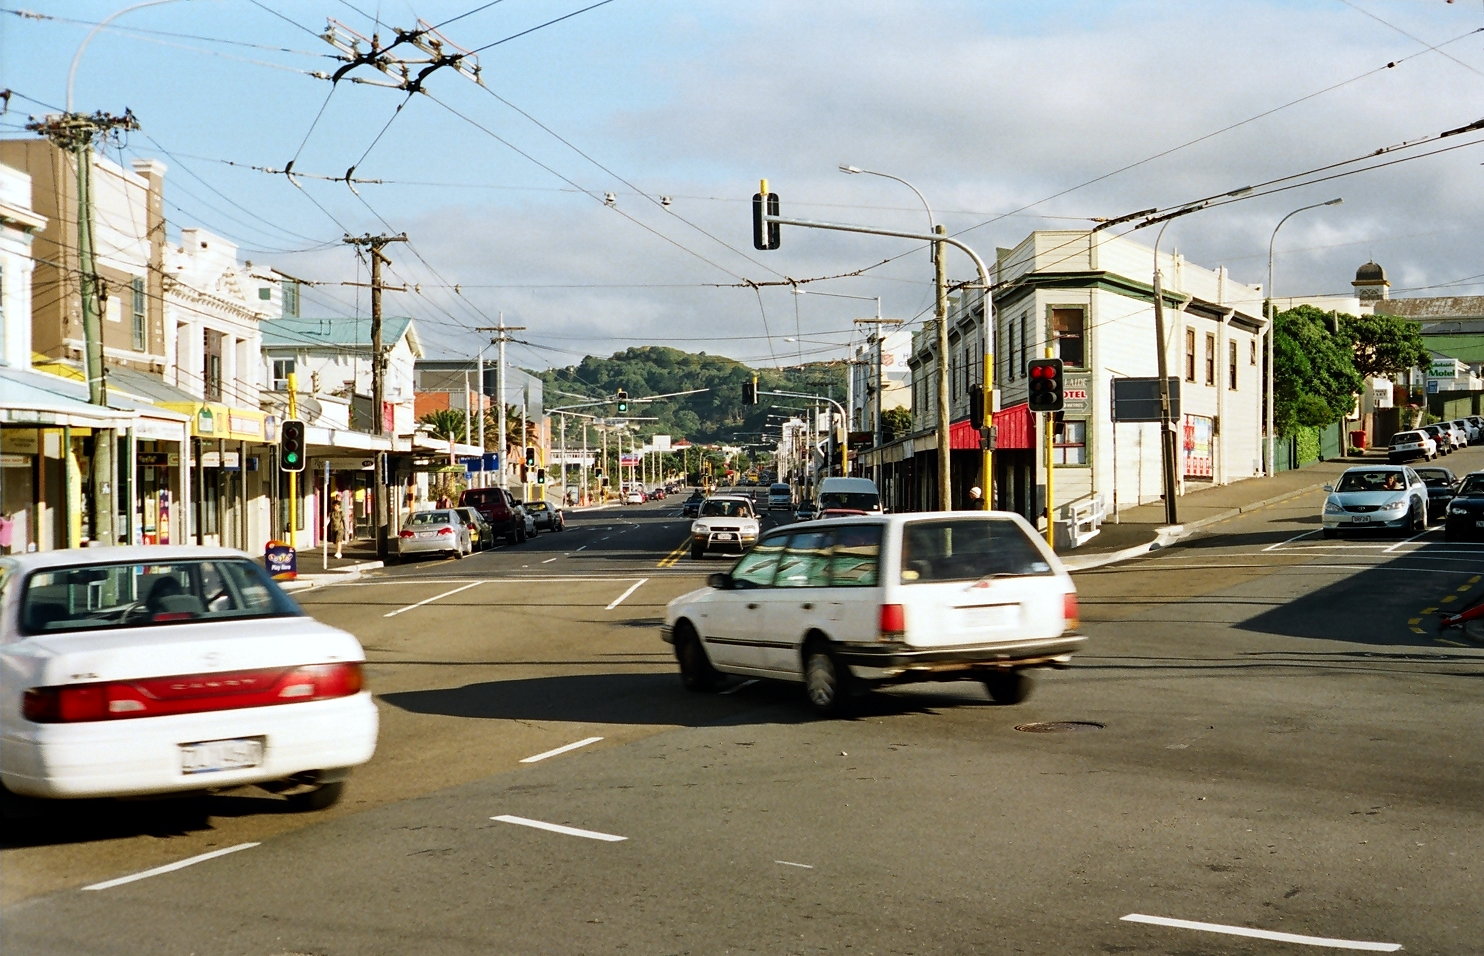 fotka / image Riddiford St do Newtownu, vpravo Adelaide Rd
, prvn dvojrole film prohnan Yashicou M - Wellington, NZ